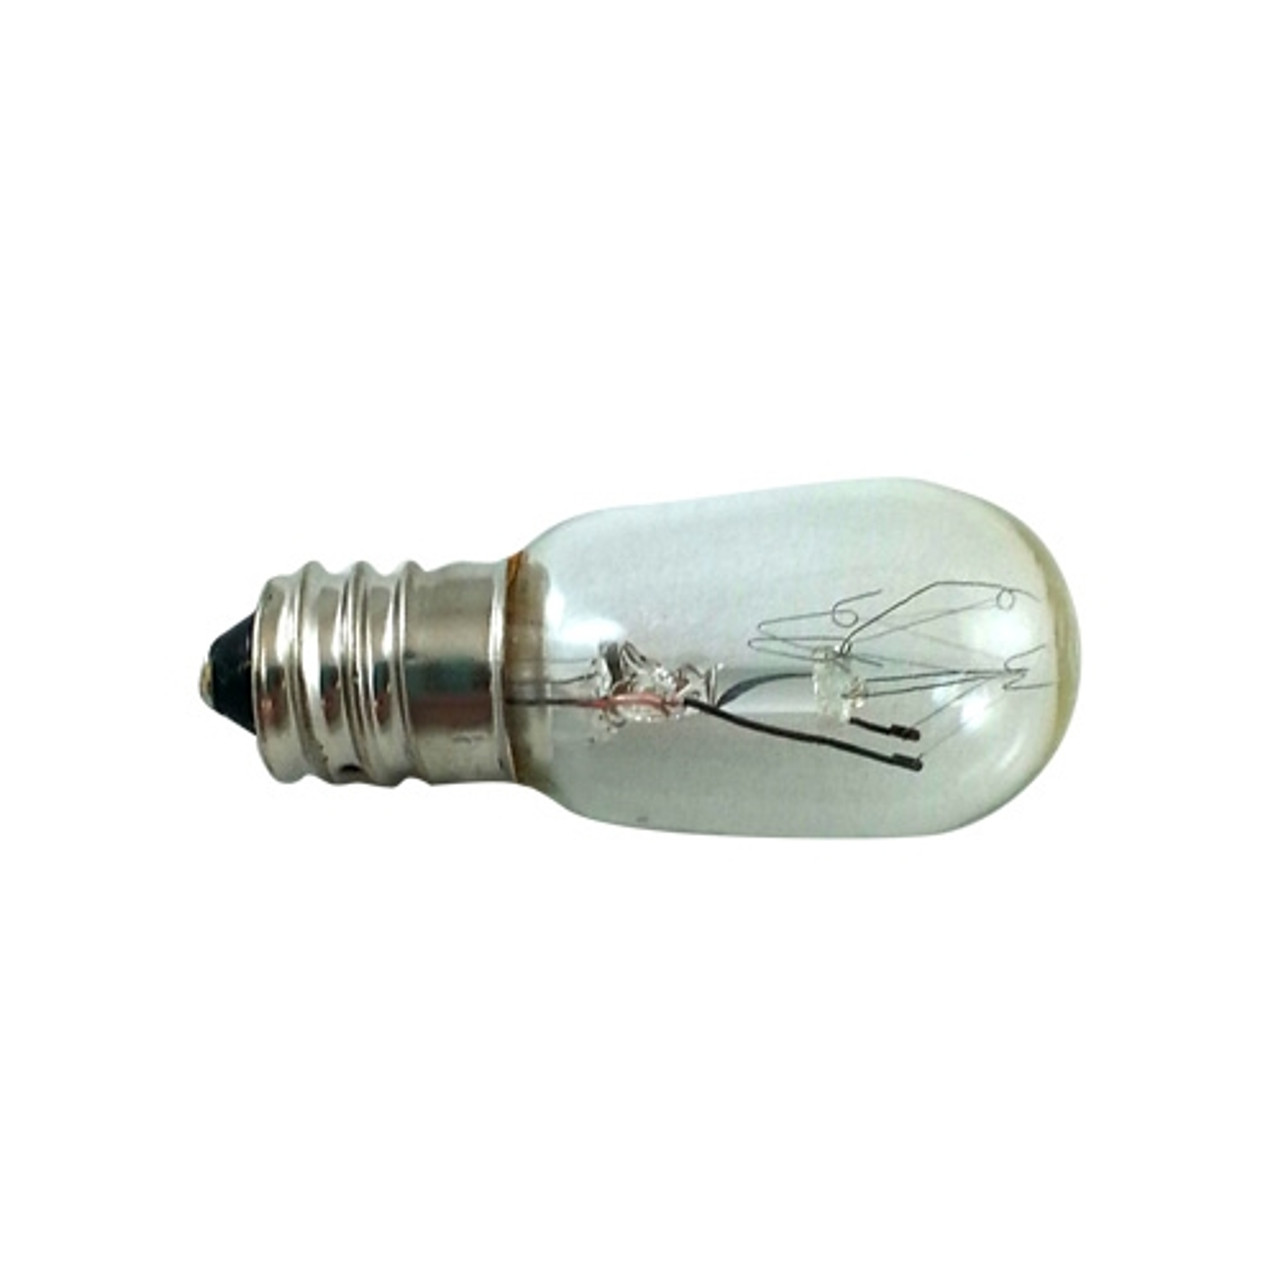 Replacing the Light Bulb - Freezer - Product Help